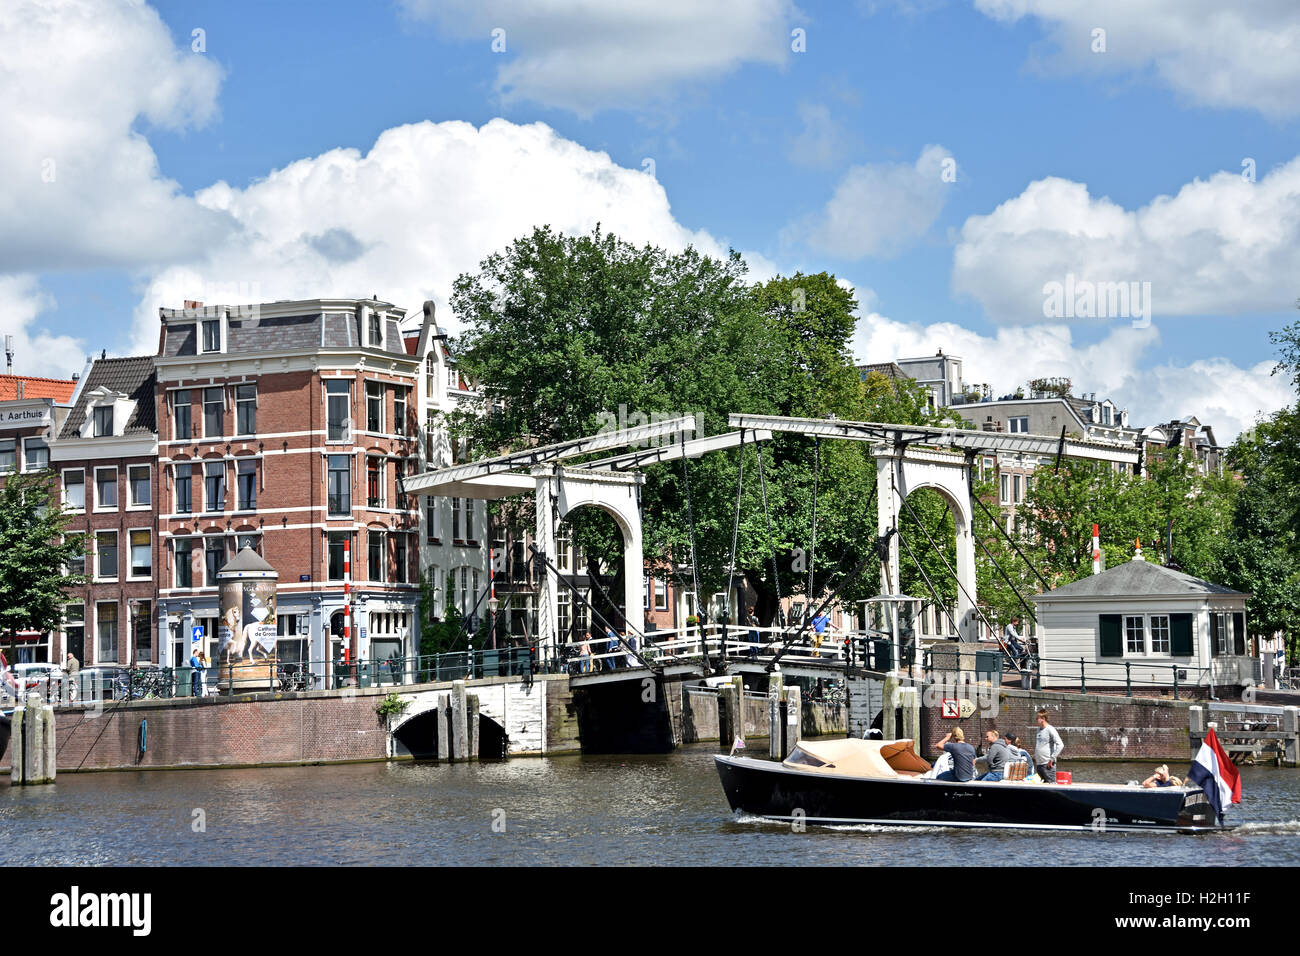 Amstel - Walter Suskindbrug olandese di Amsterdam Paesi Bassi Foto Stock